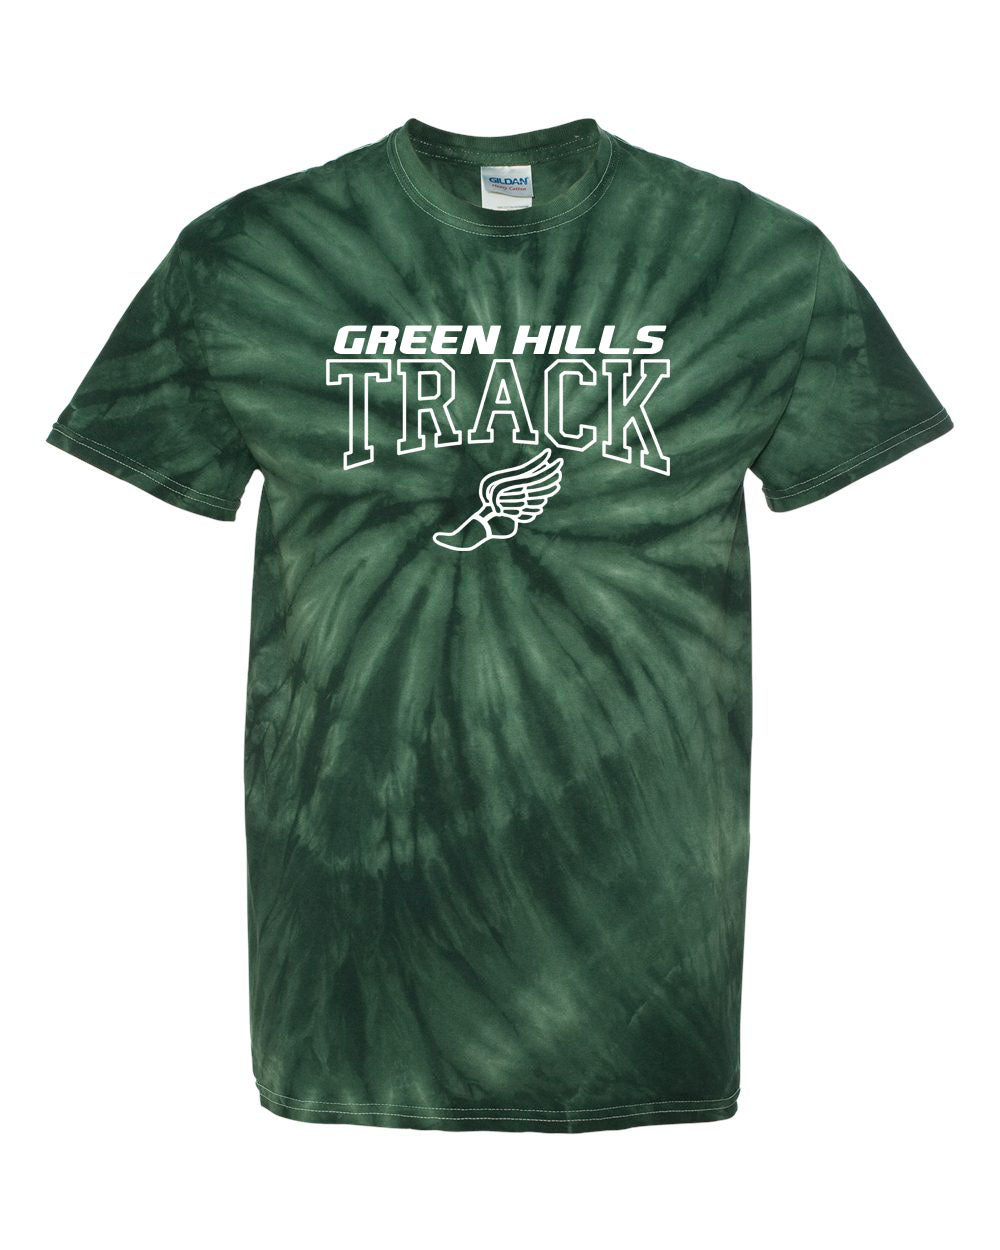 Green Hills Track Design 3 Tie Dye t-shirt